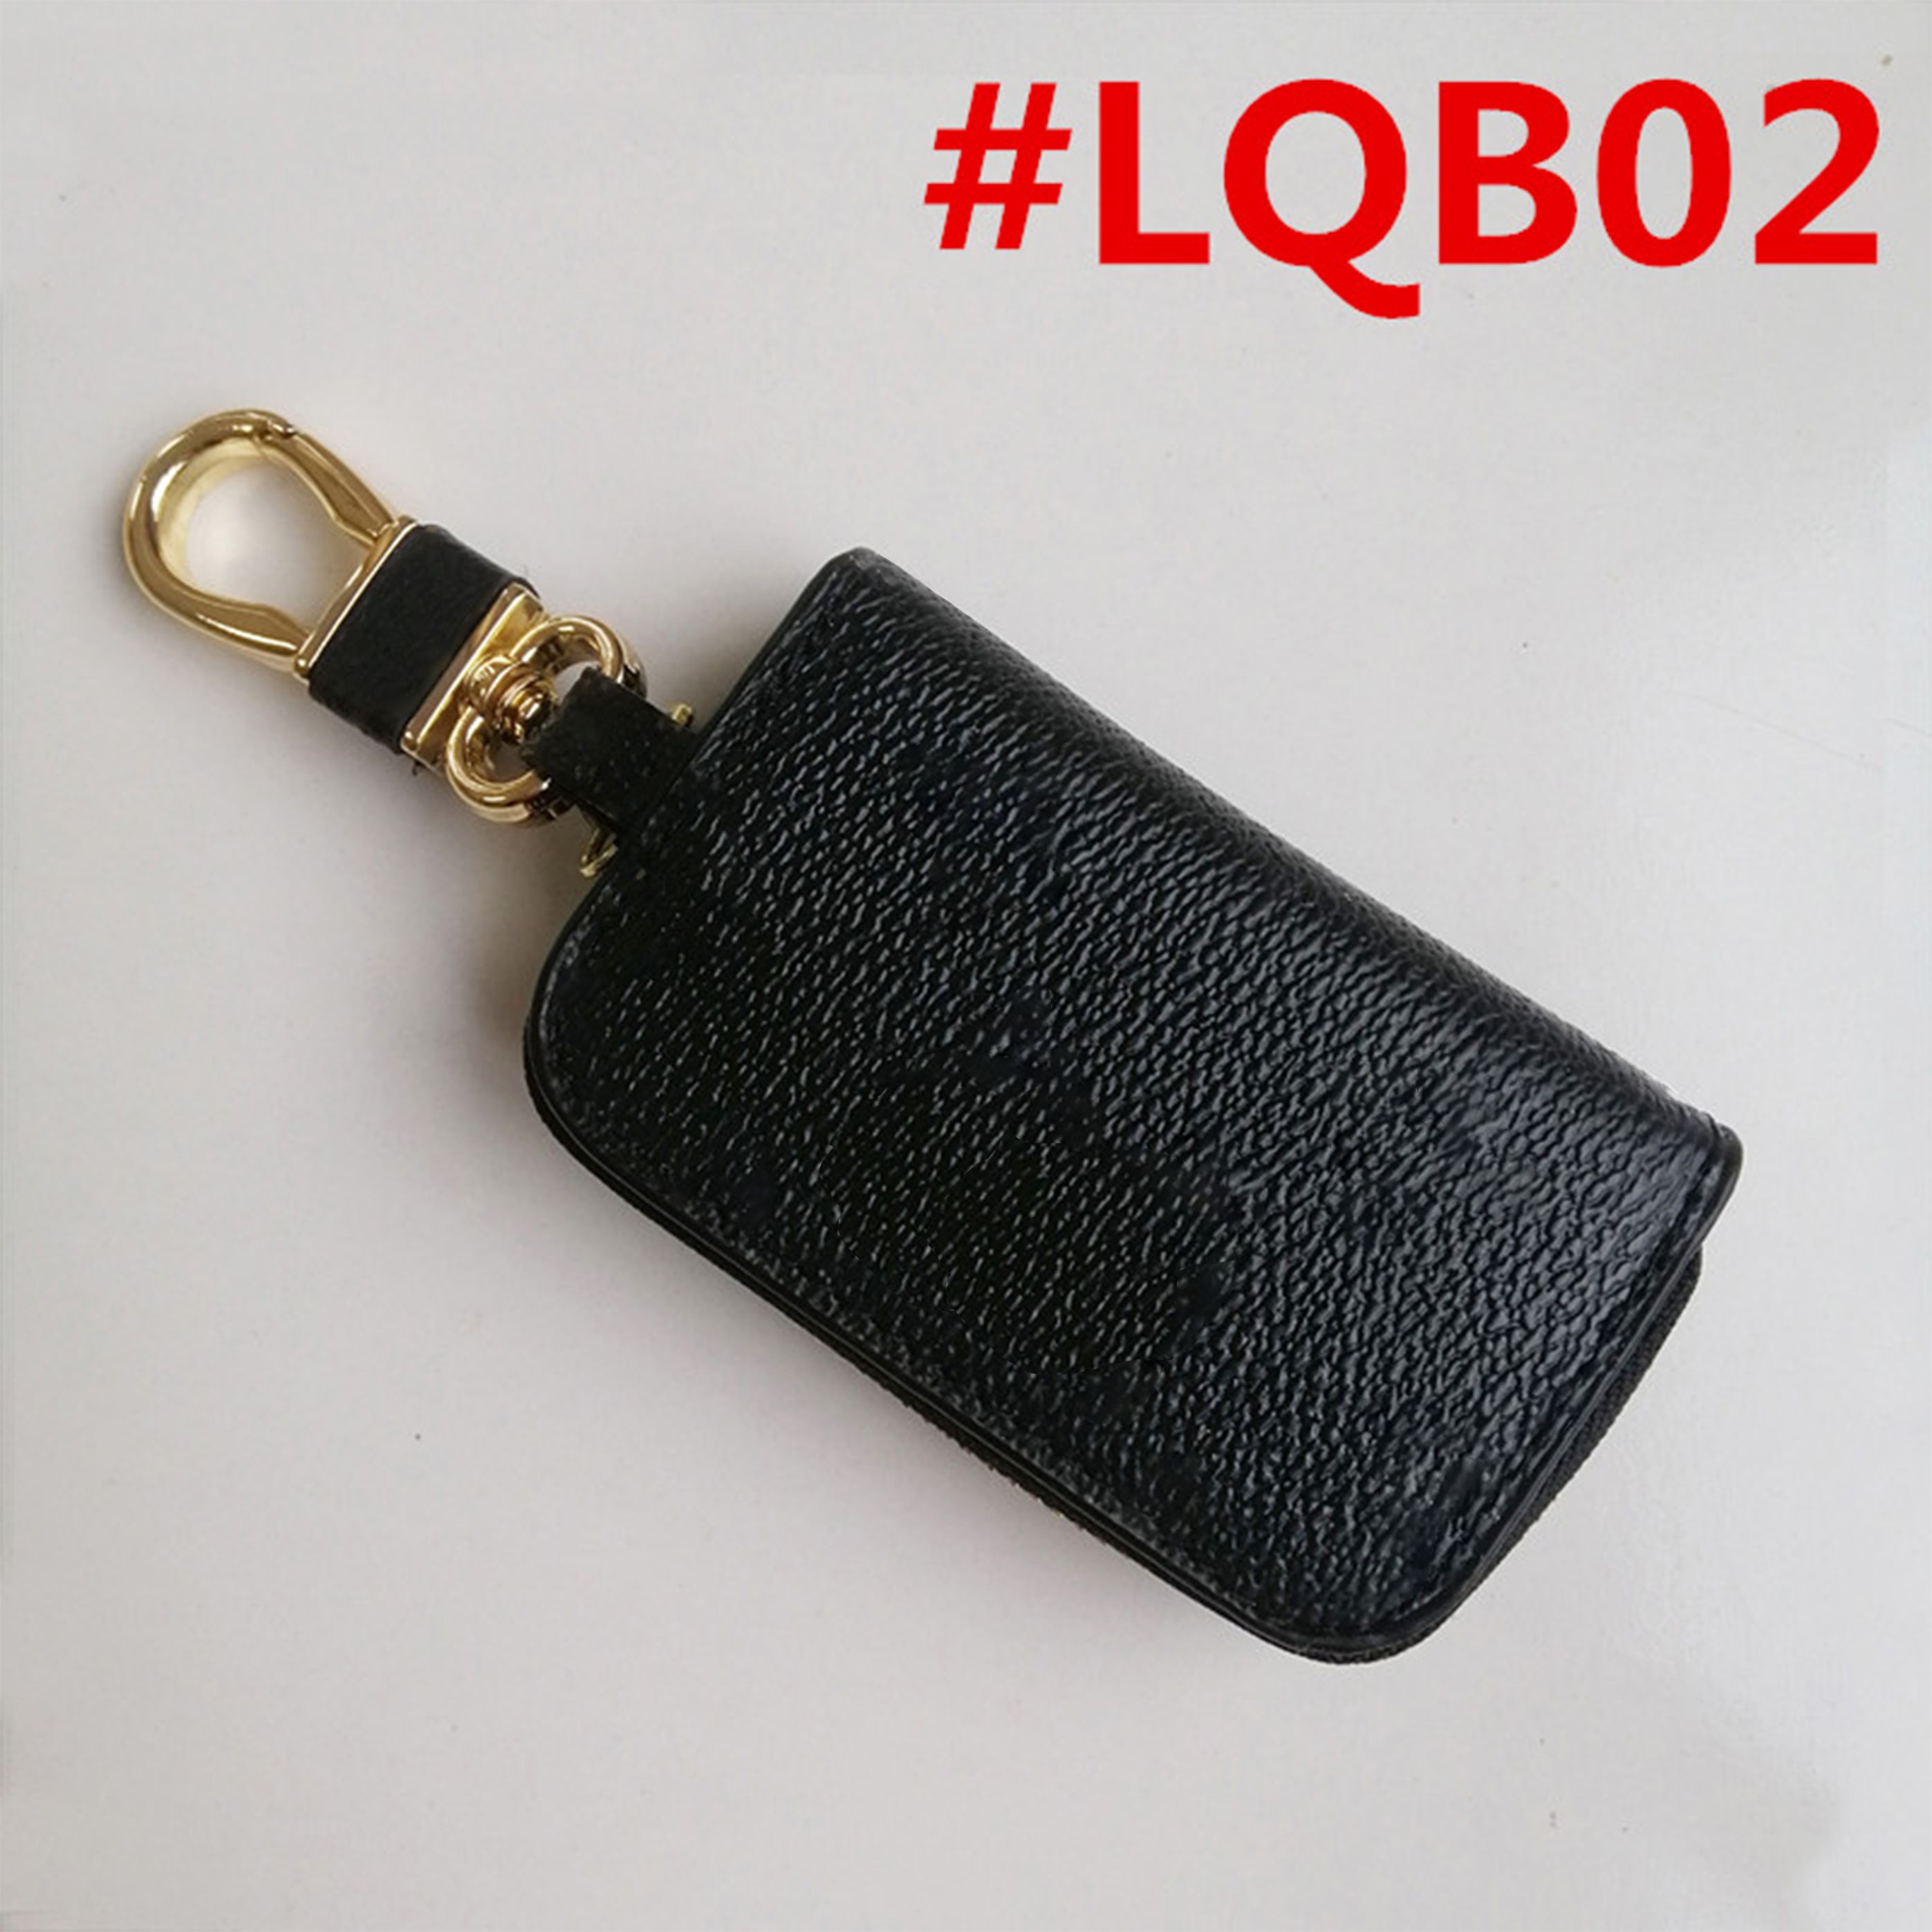 LQB02